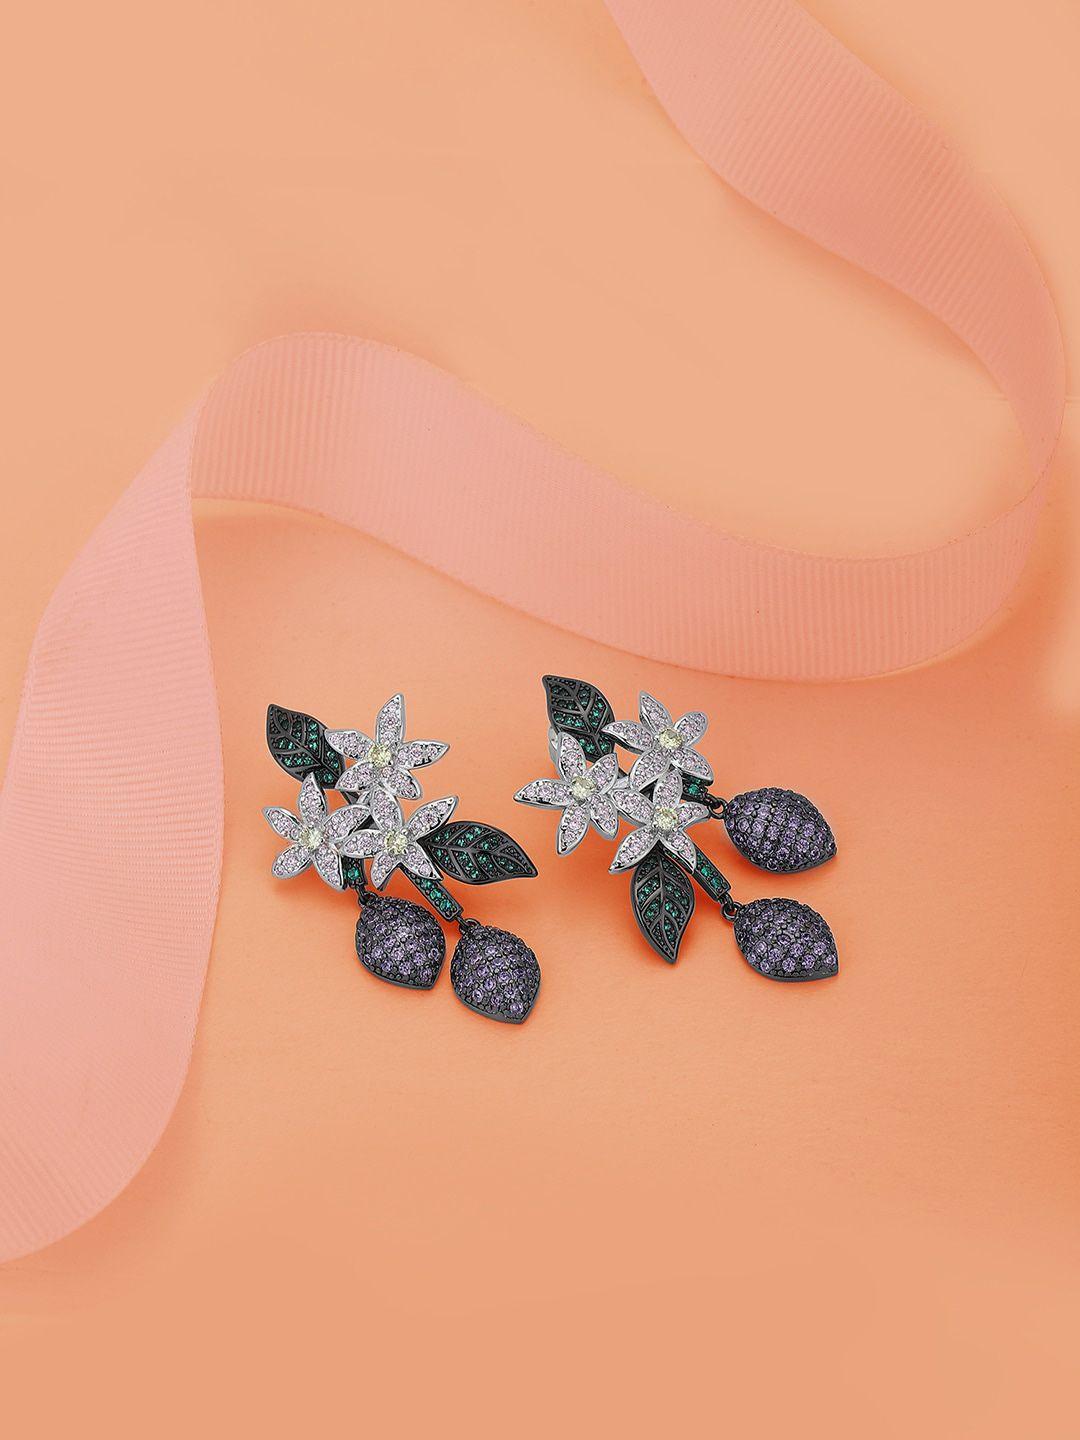 carlton london silver-plated floral drop earrings